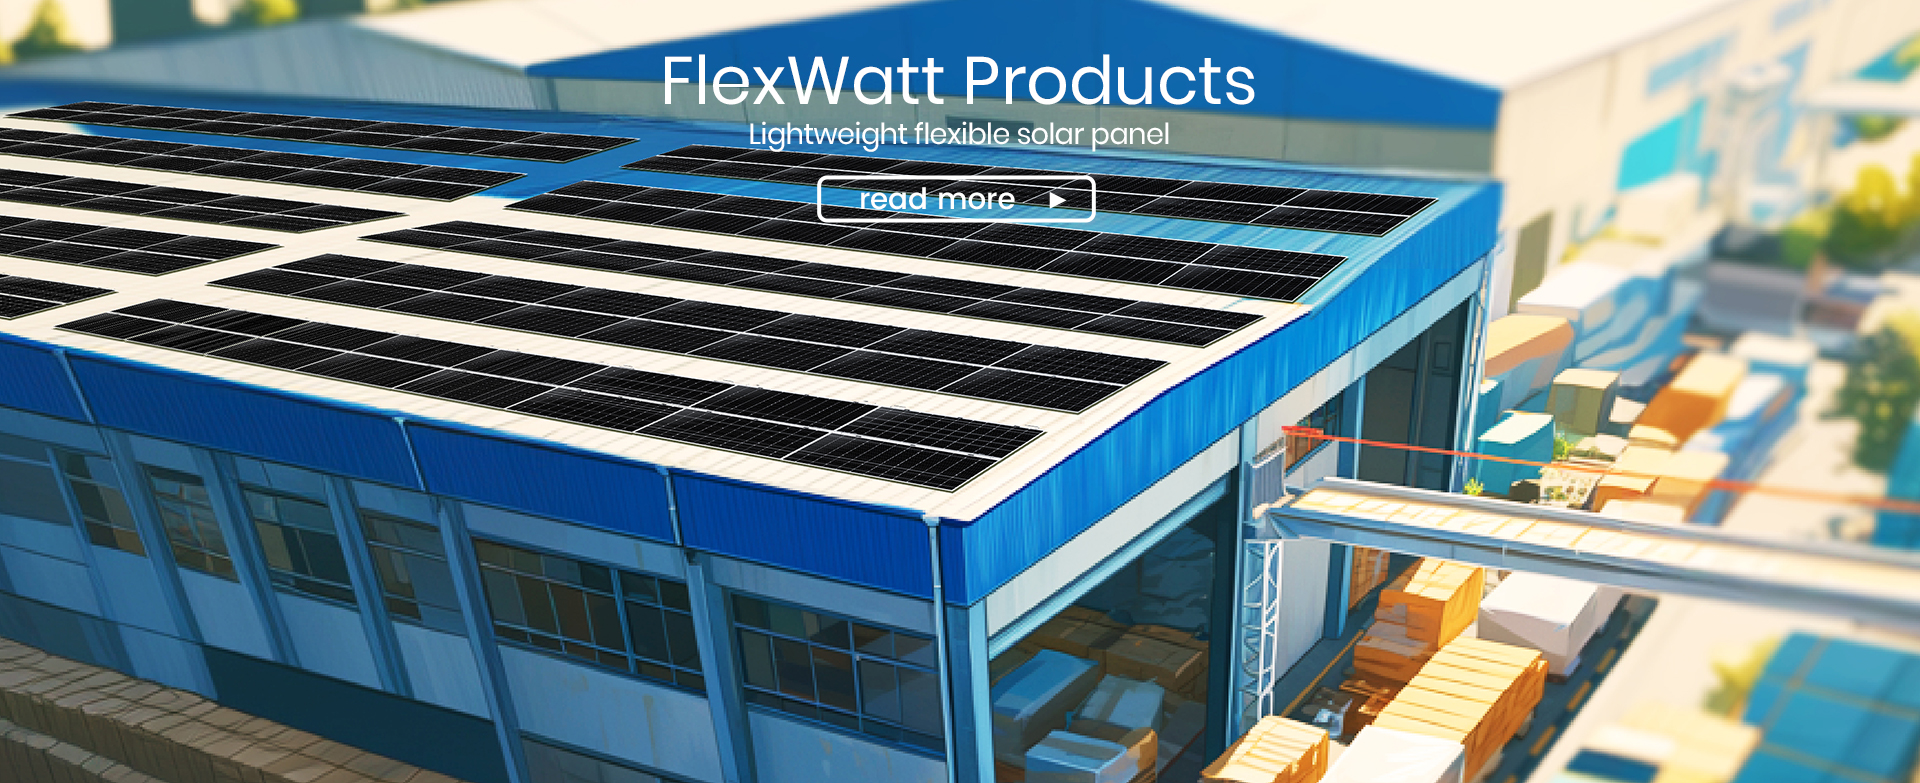 FlexWatt Products